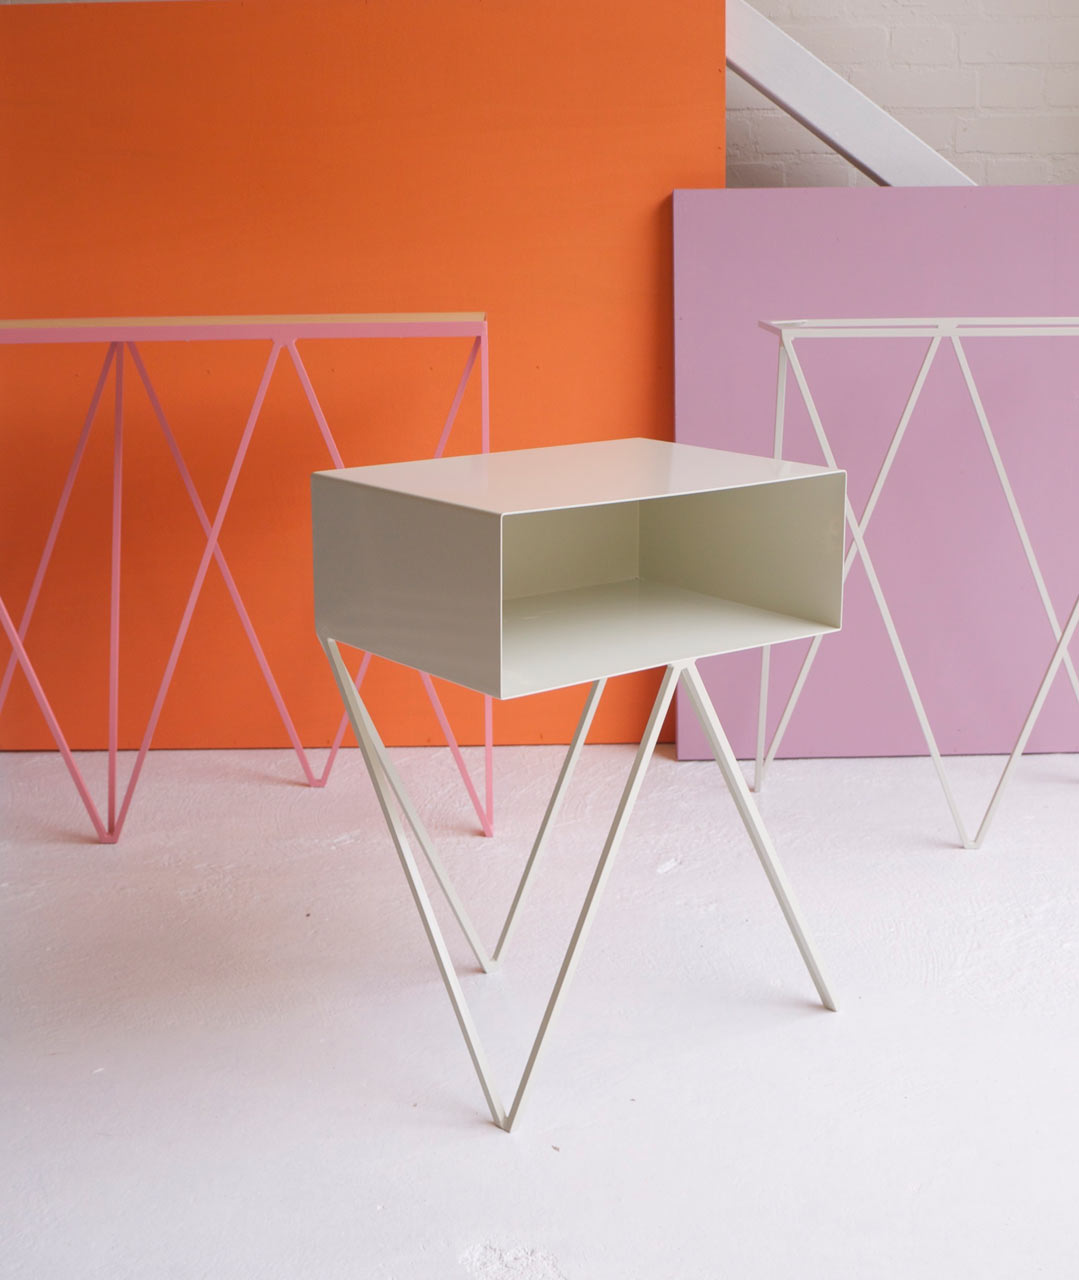 The Minimalist Furniture Made of Steel_1